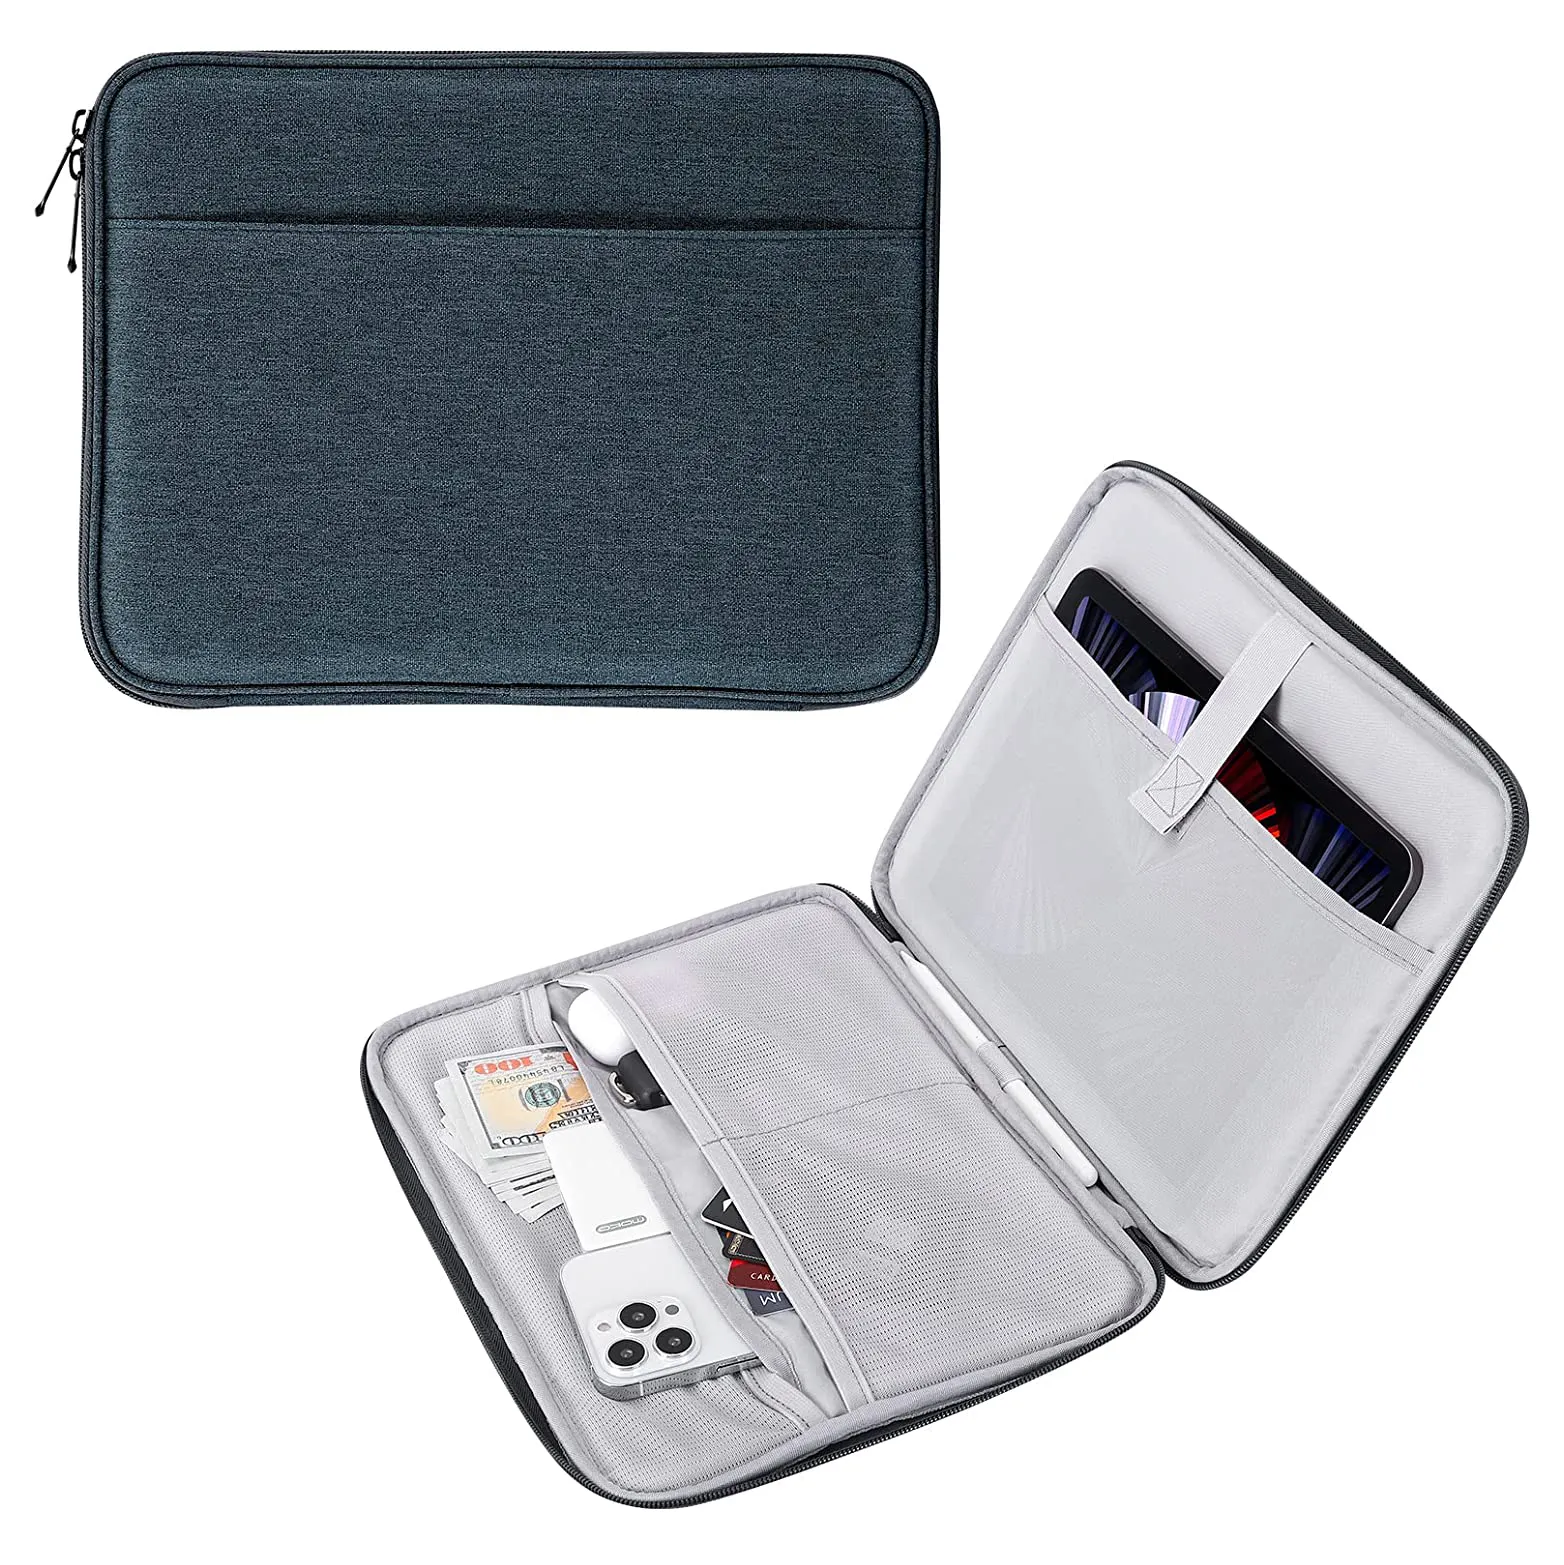 MoKo tas bawa Tablet portabel Universal, tas pembawa poliester tahan air lapisan flanel lembut saku samping penutup Loop kait